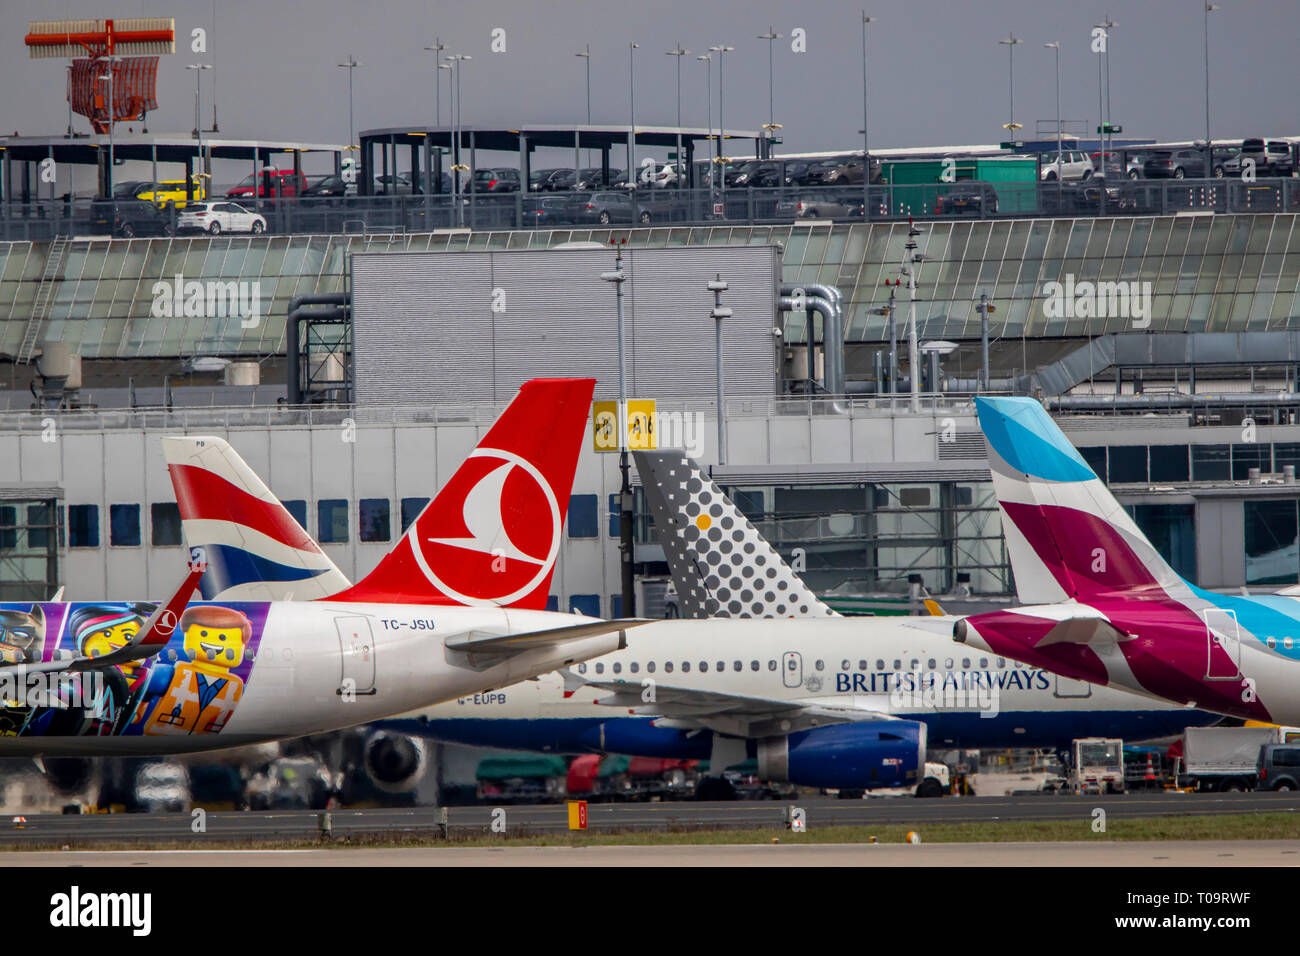 El Aeropuerto Internacional de Dusseldorf, DHE, British Airways, Turkish Airlines, Eurowings Foto de stock